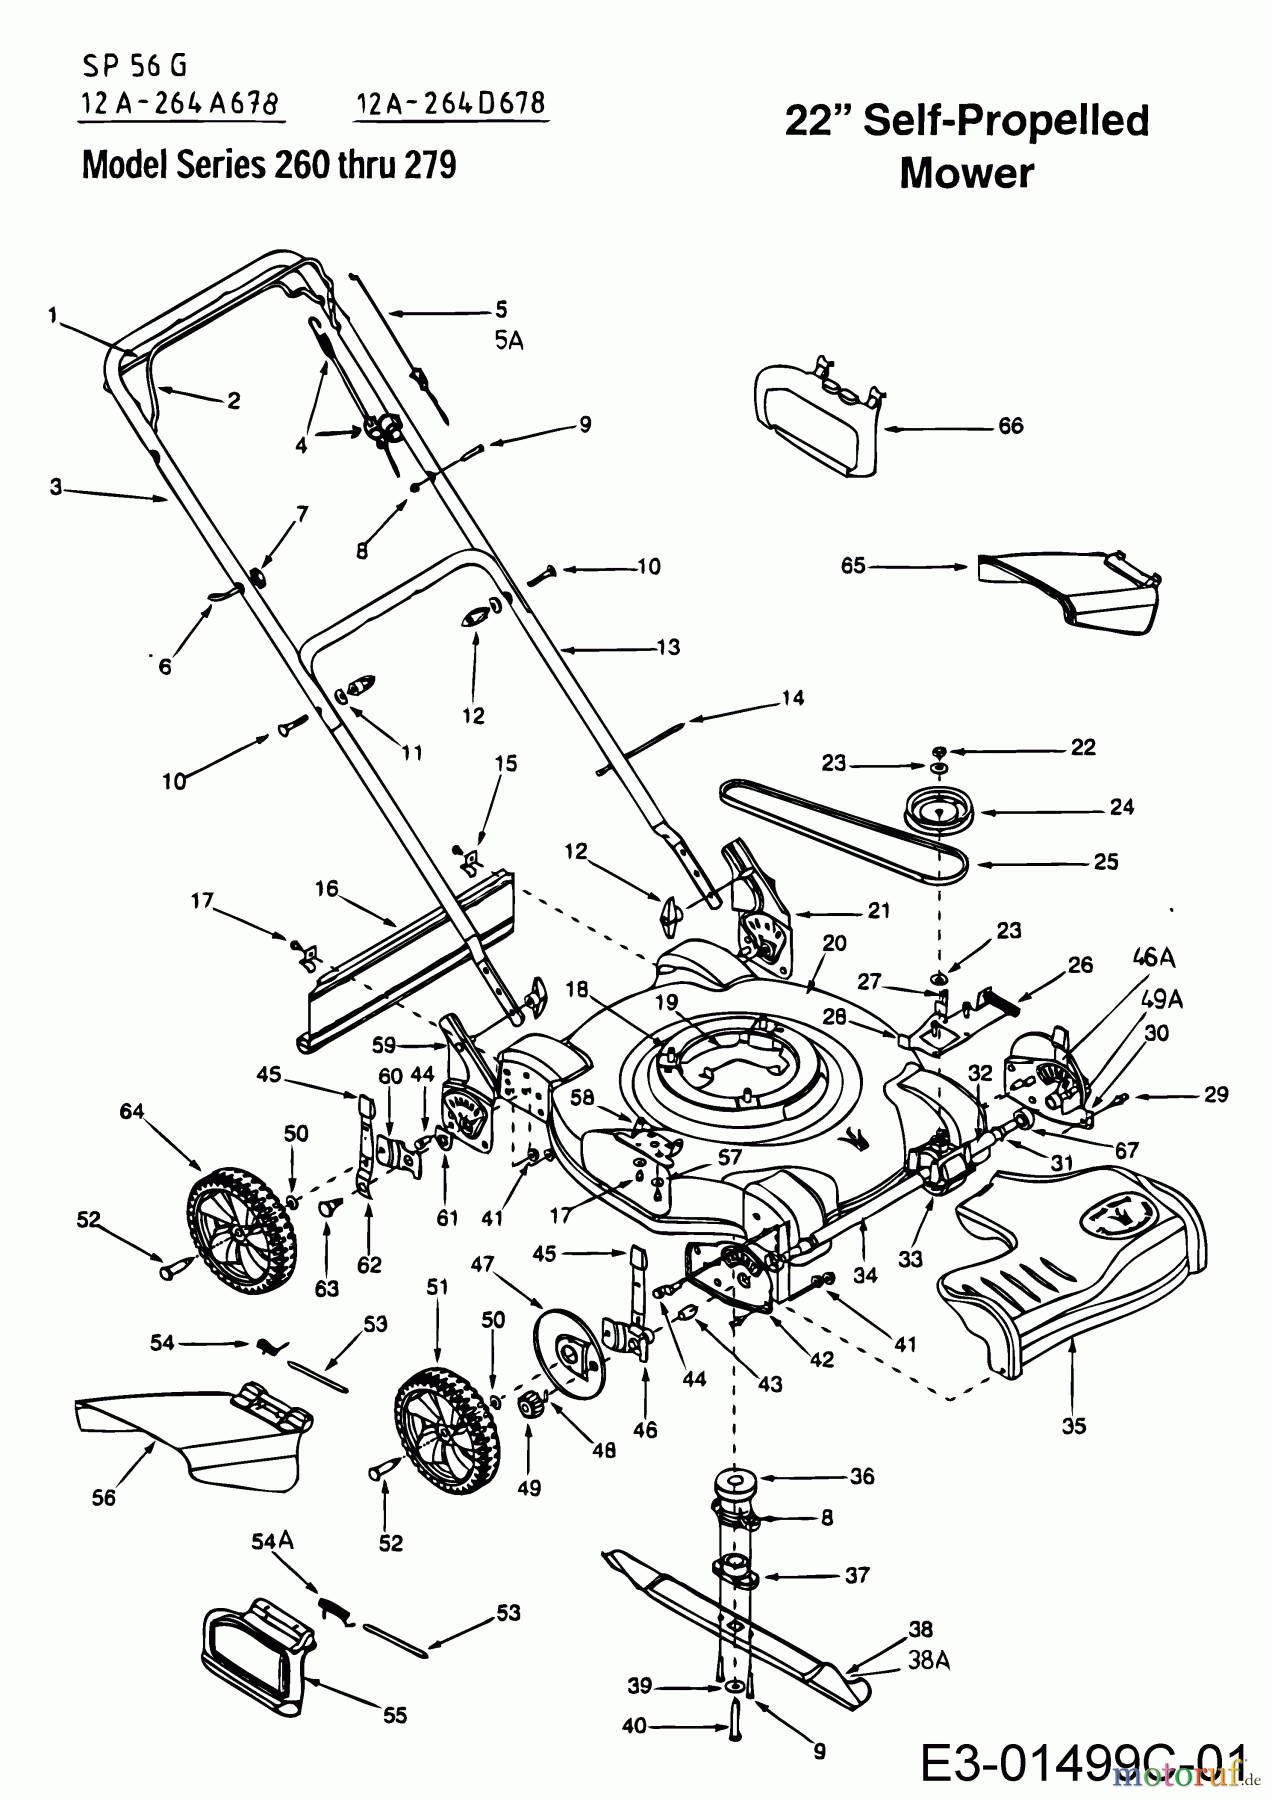  MTD Motormäher mit Antrieb SP 56 G 12A-264A678  (2002) Grundgerät